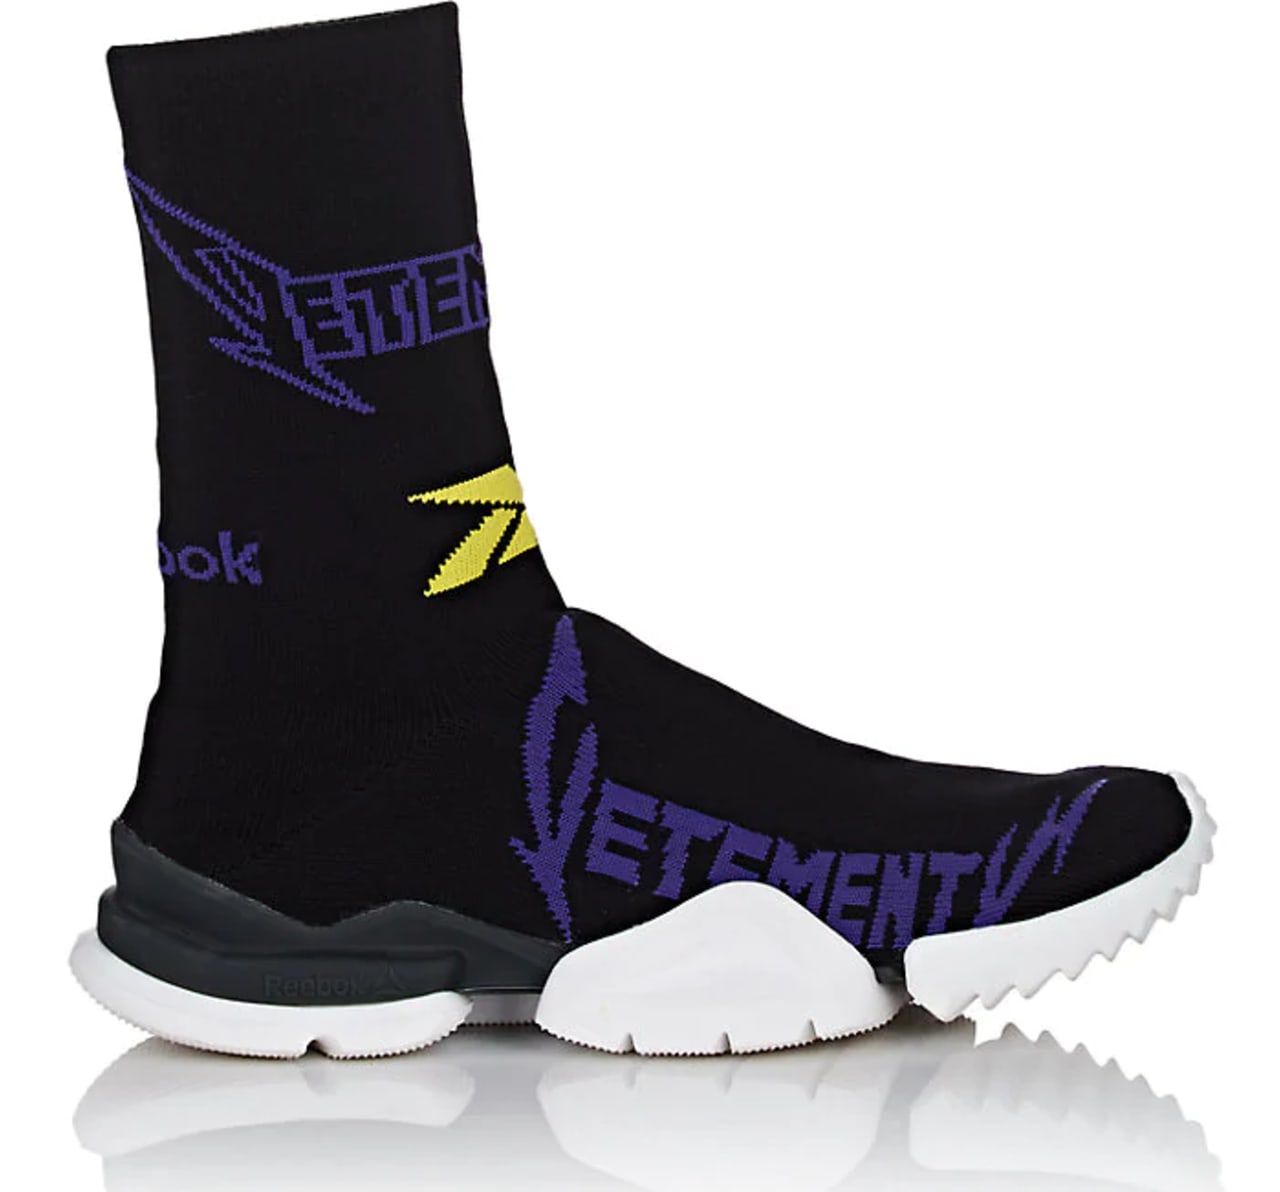 Vetements x Reebok Sock Runner Release 